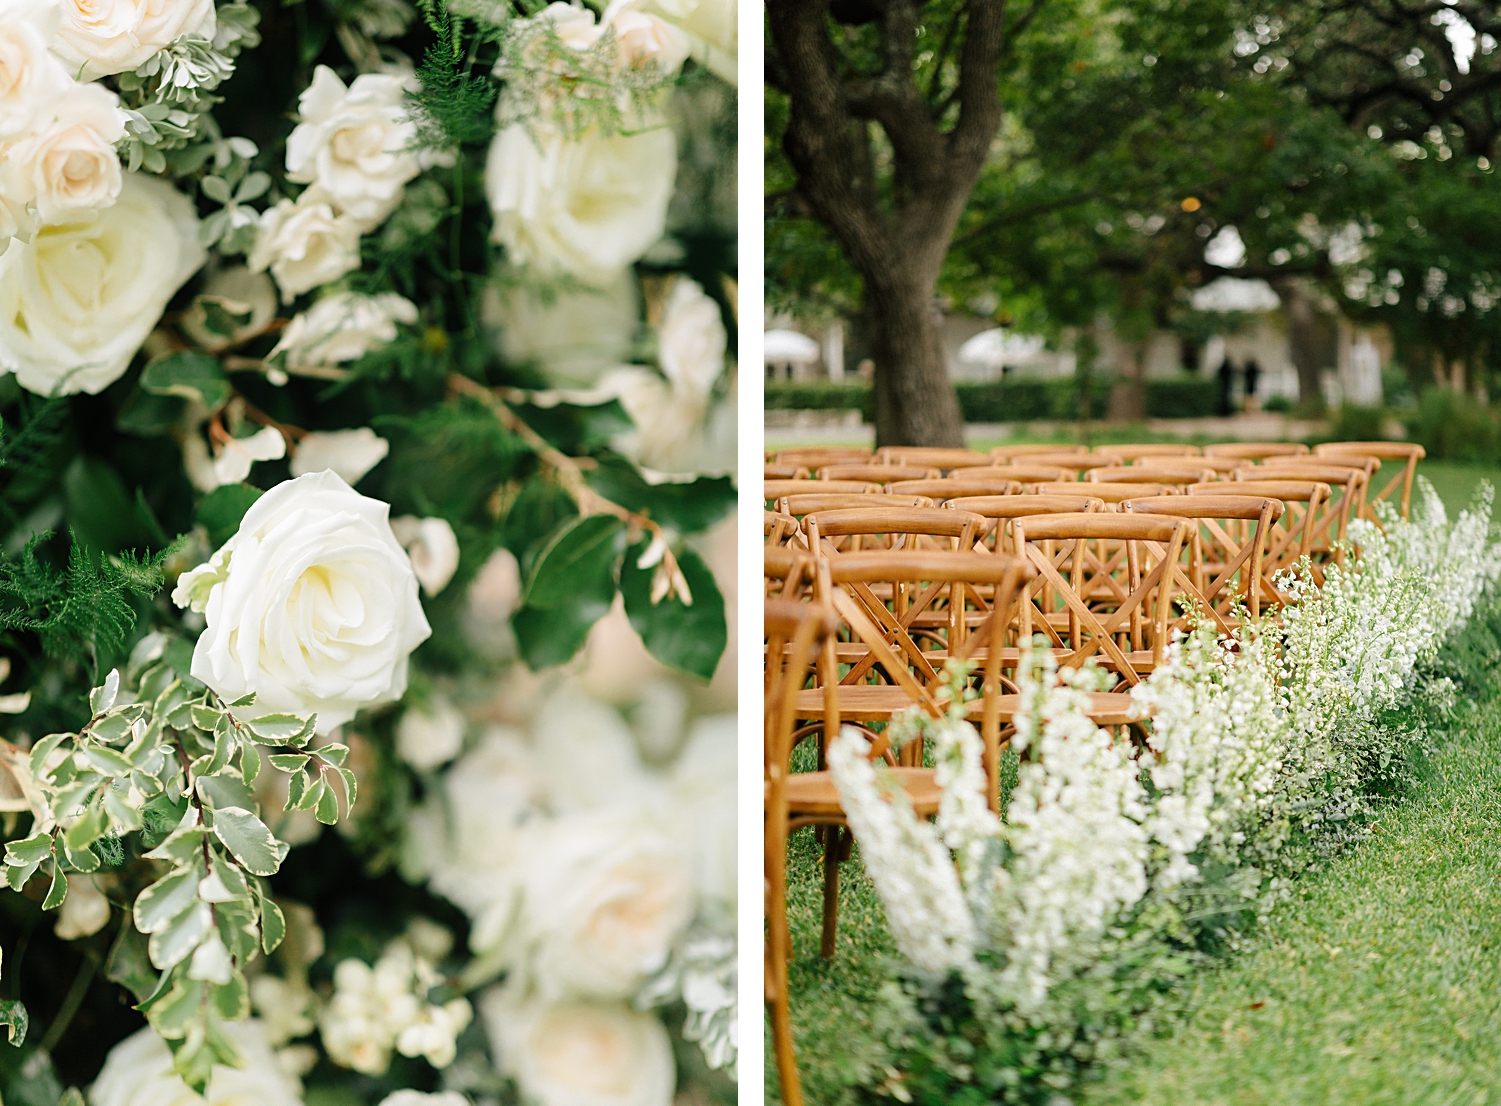 Wedding ceremony design altar Mattie's Austin Venue trees white flowers down aisle arch